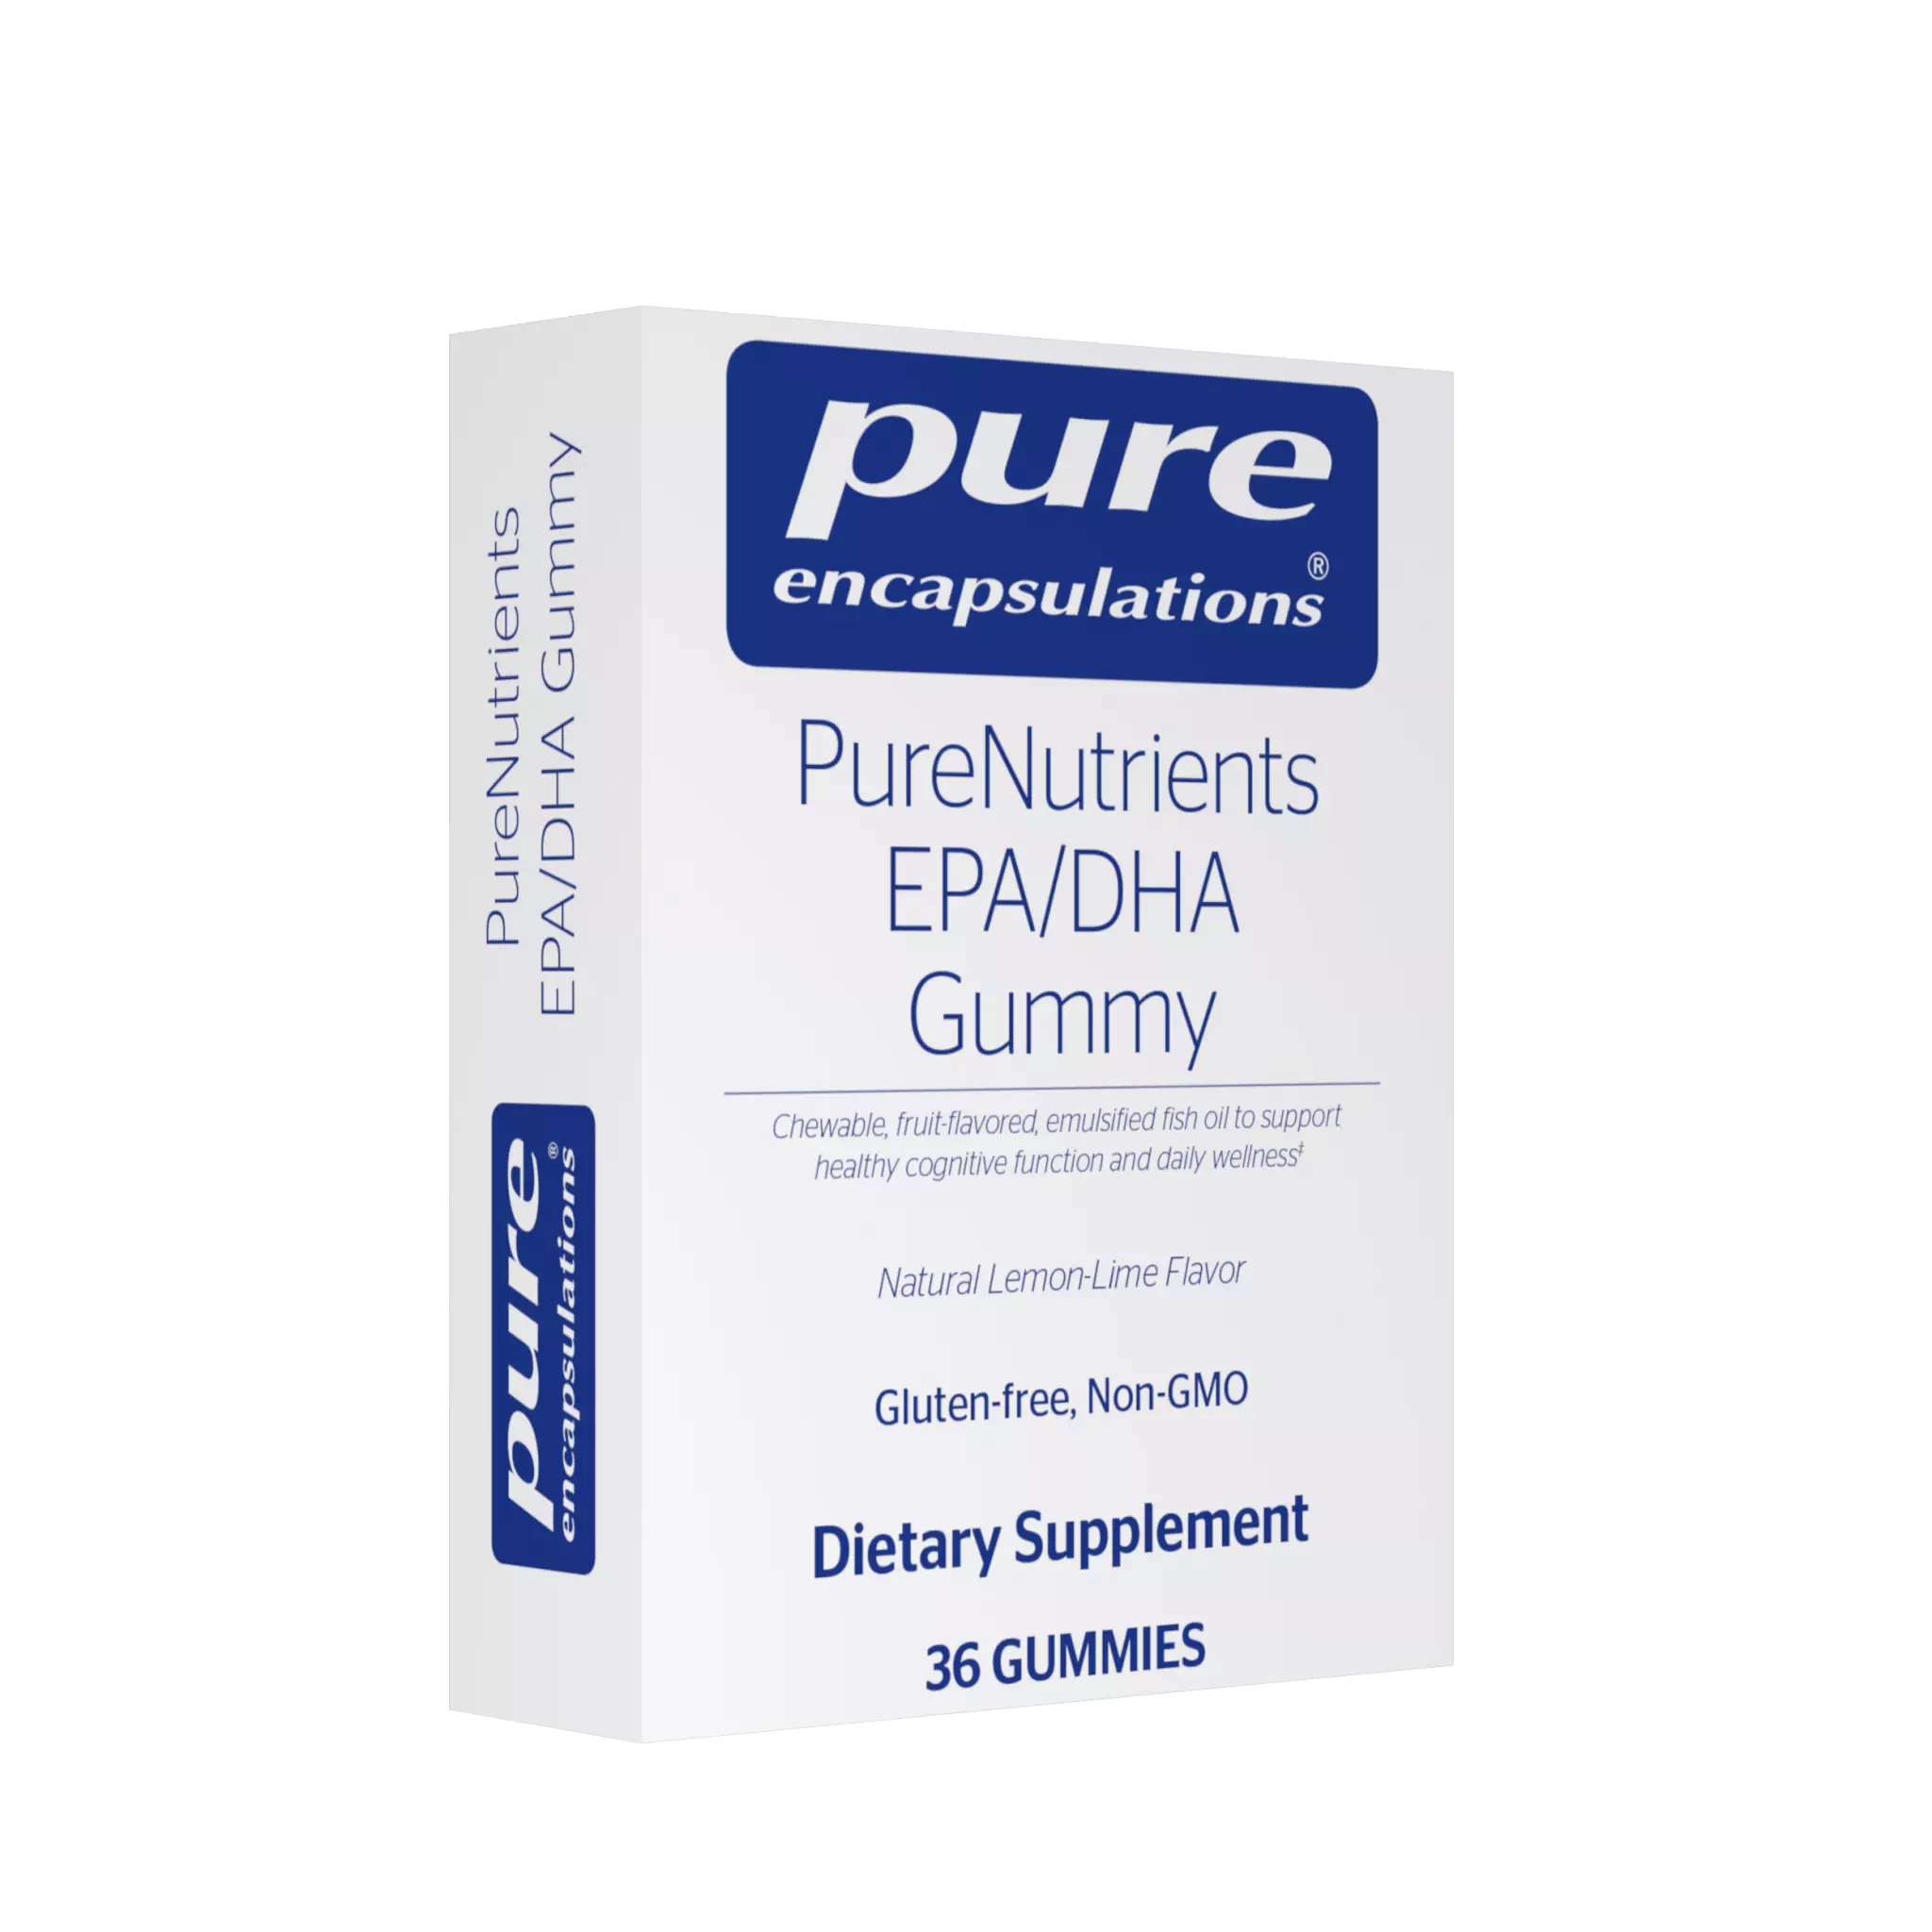 Pure Encapsulations - Purenutrients Epa/Dha Gummy